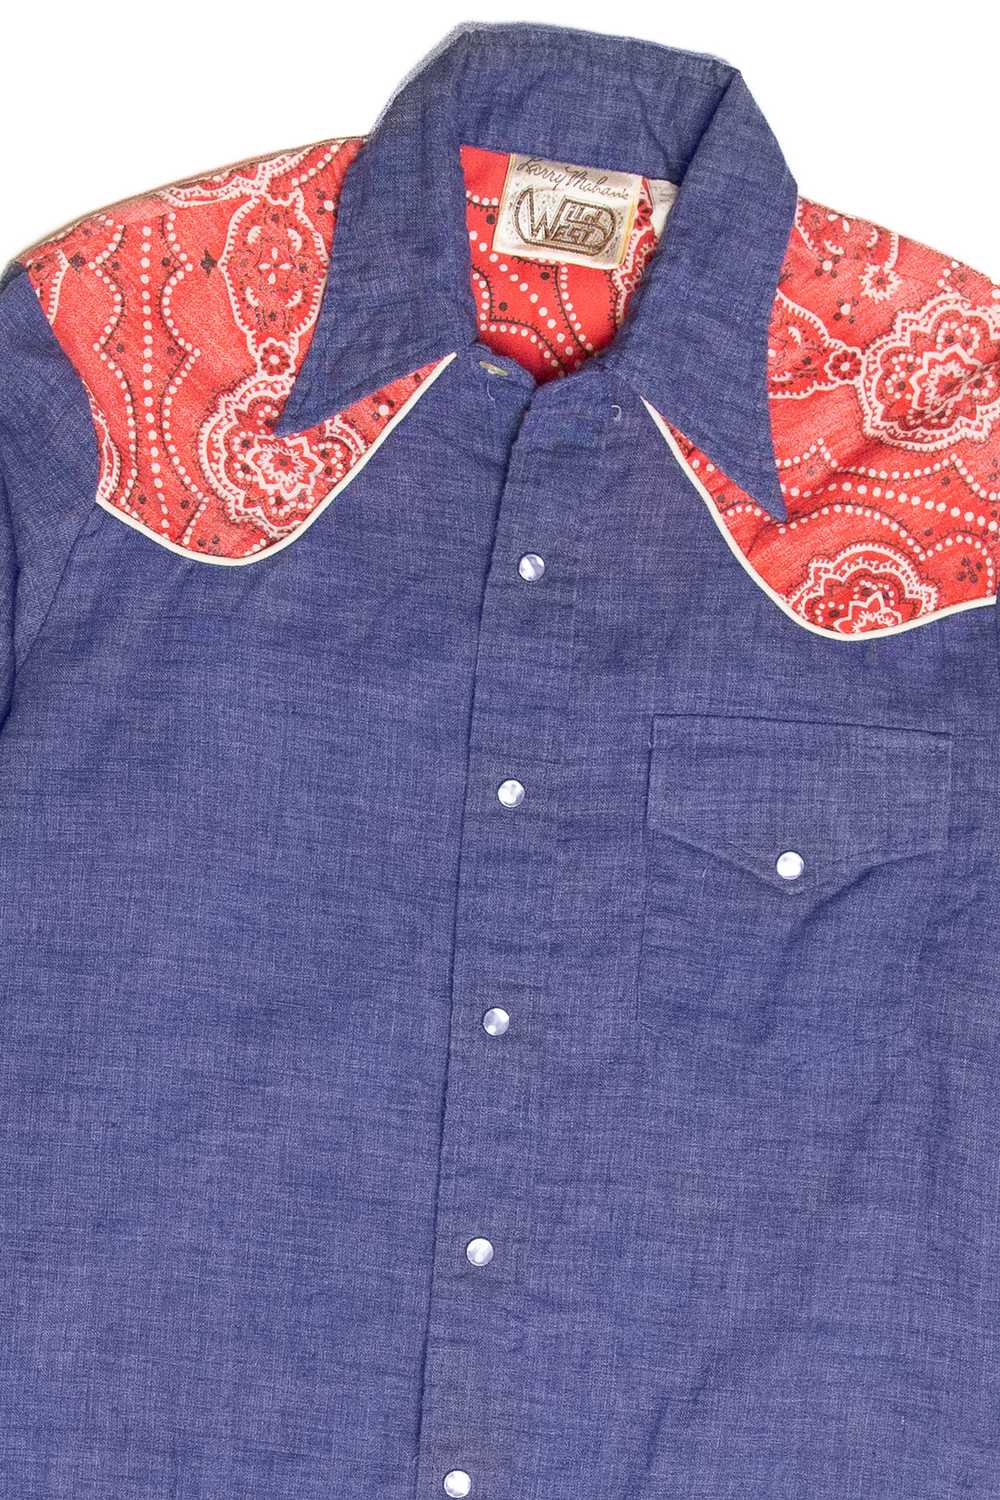 Vintage Larry Mahan Western Button Up Shirt - image 2